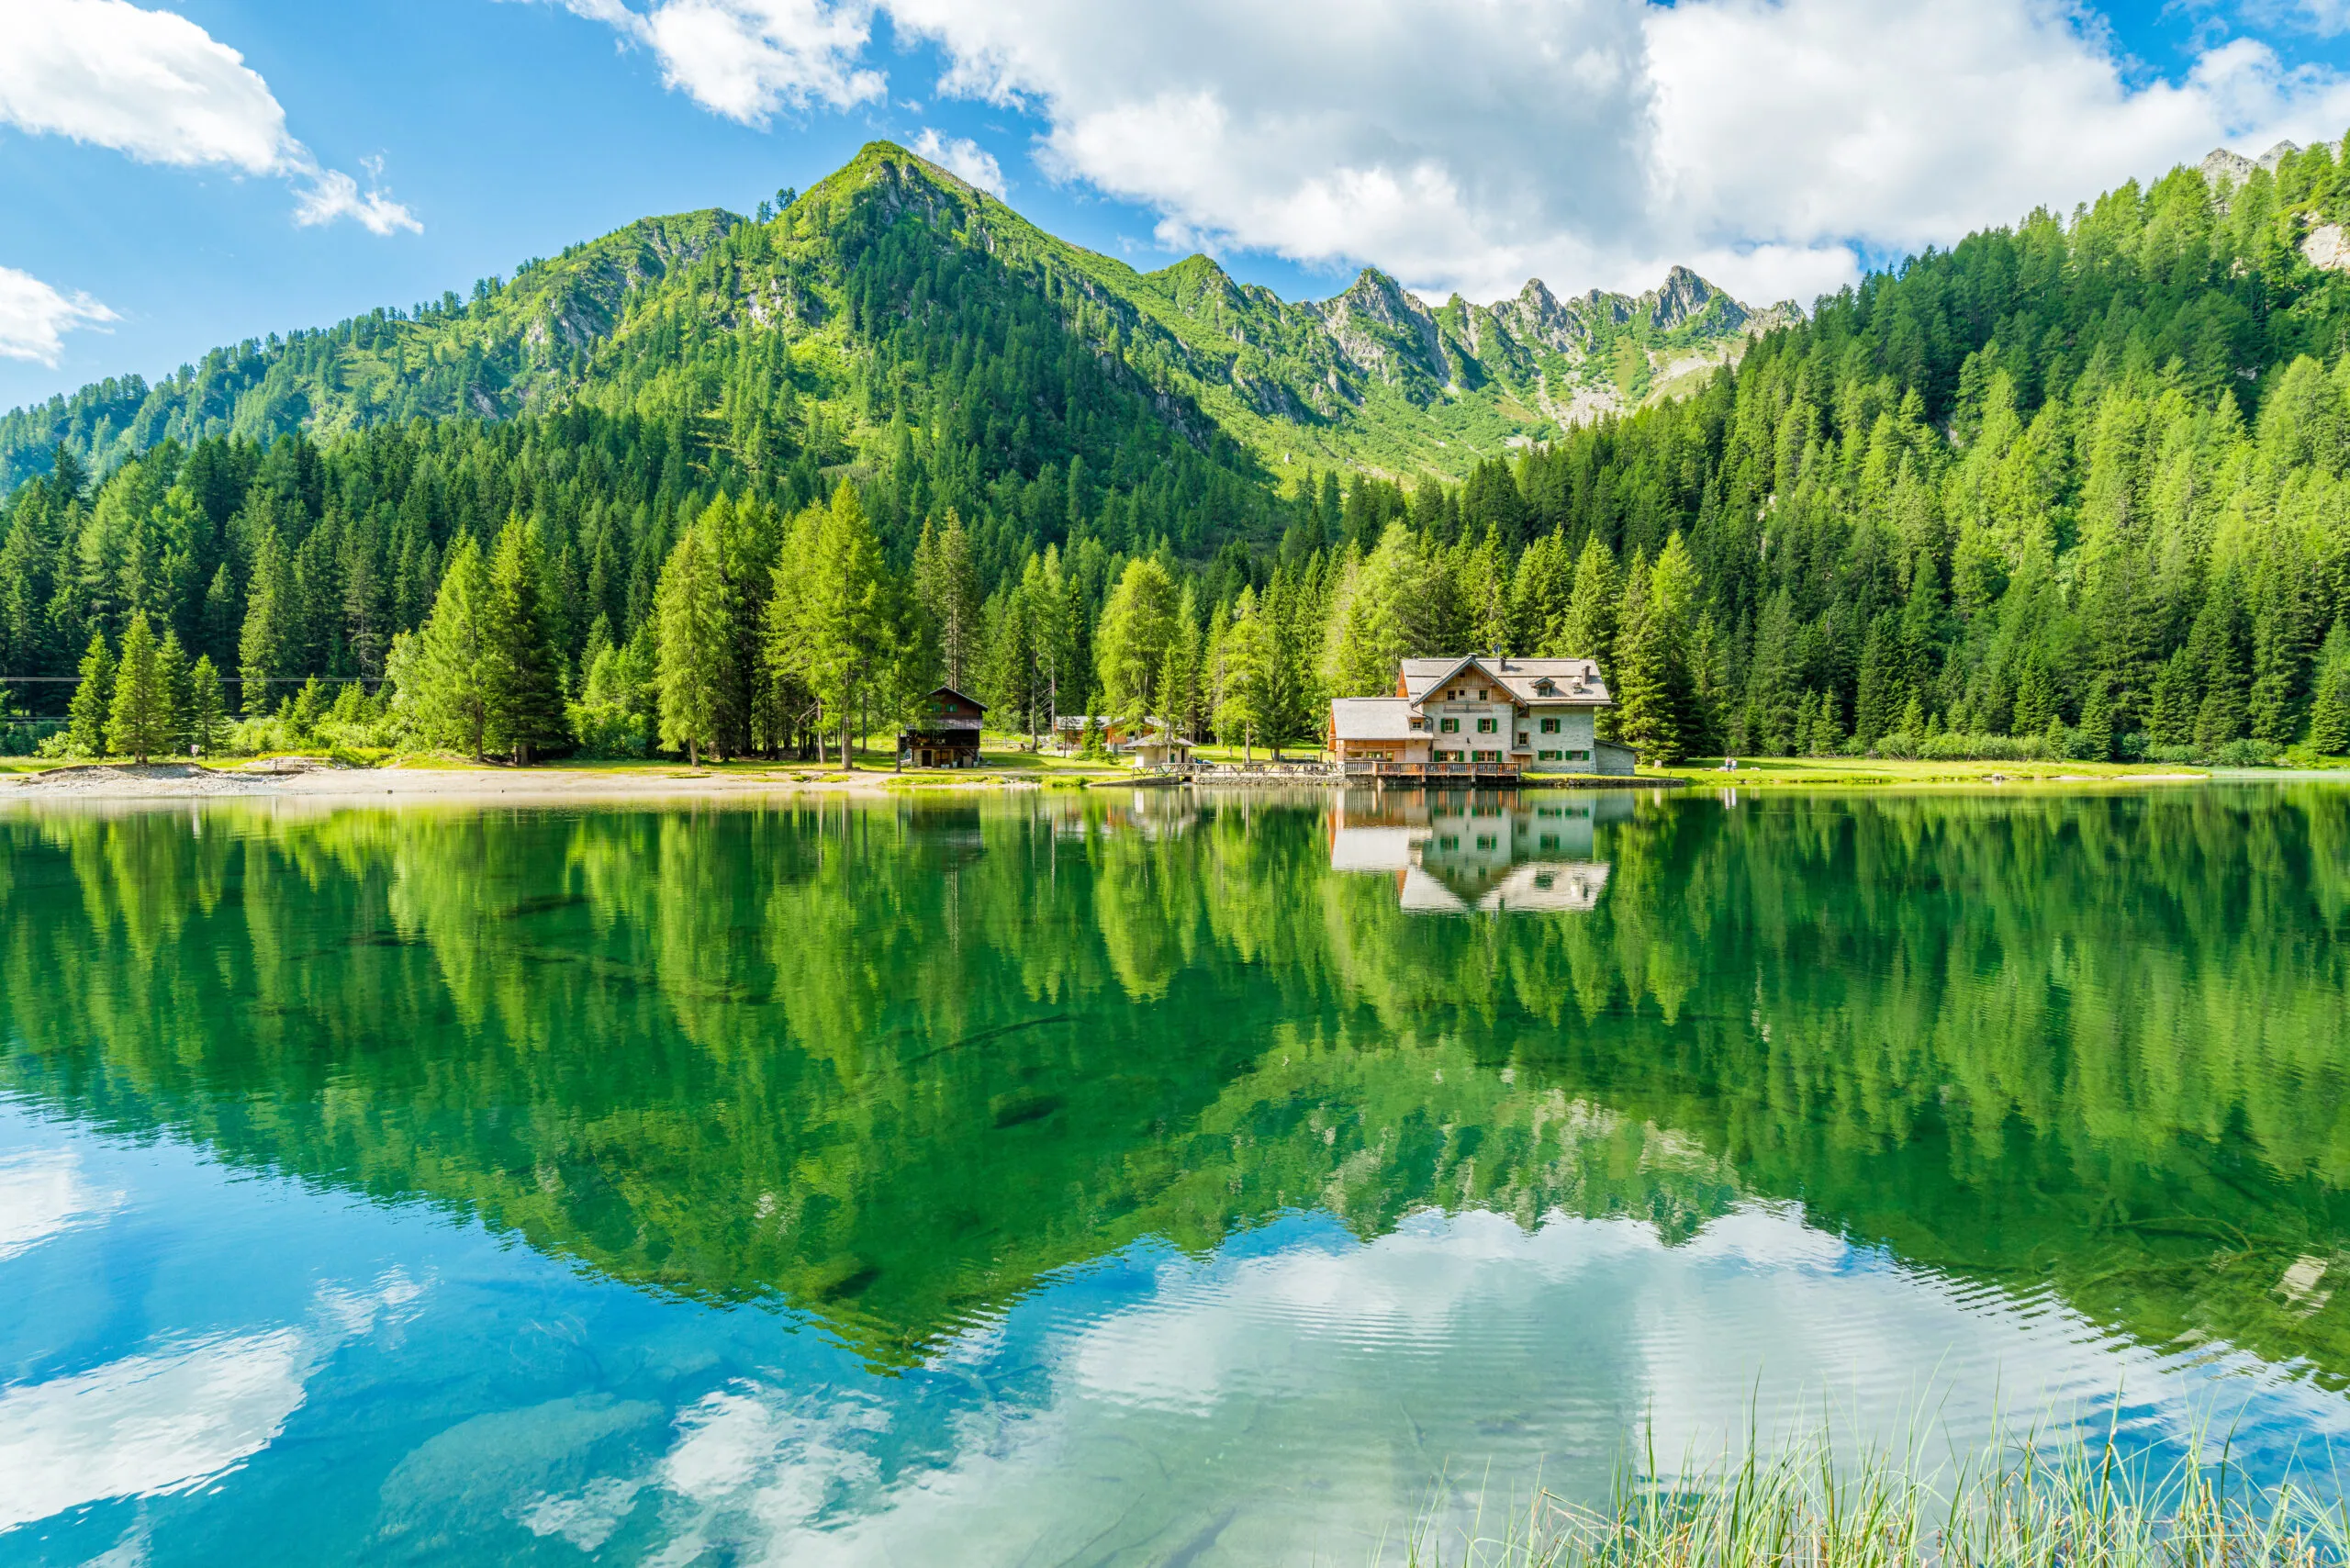 Idyllisk landskab ved Nambino-søen, nær Madonna di Campiglio. Provinsen Trento, Trentino Alto Adige, Norditalien.